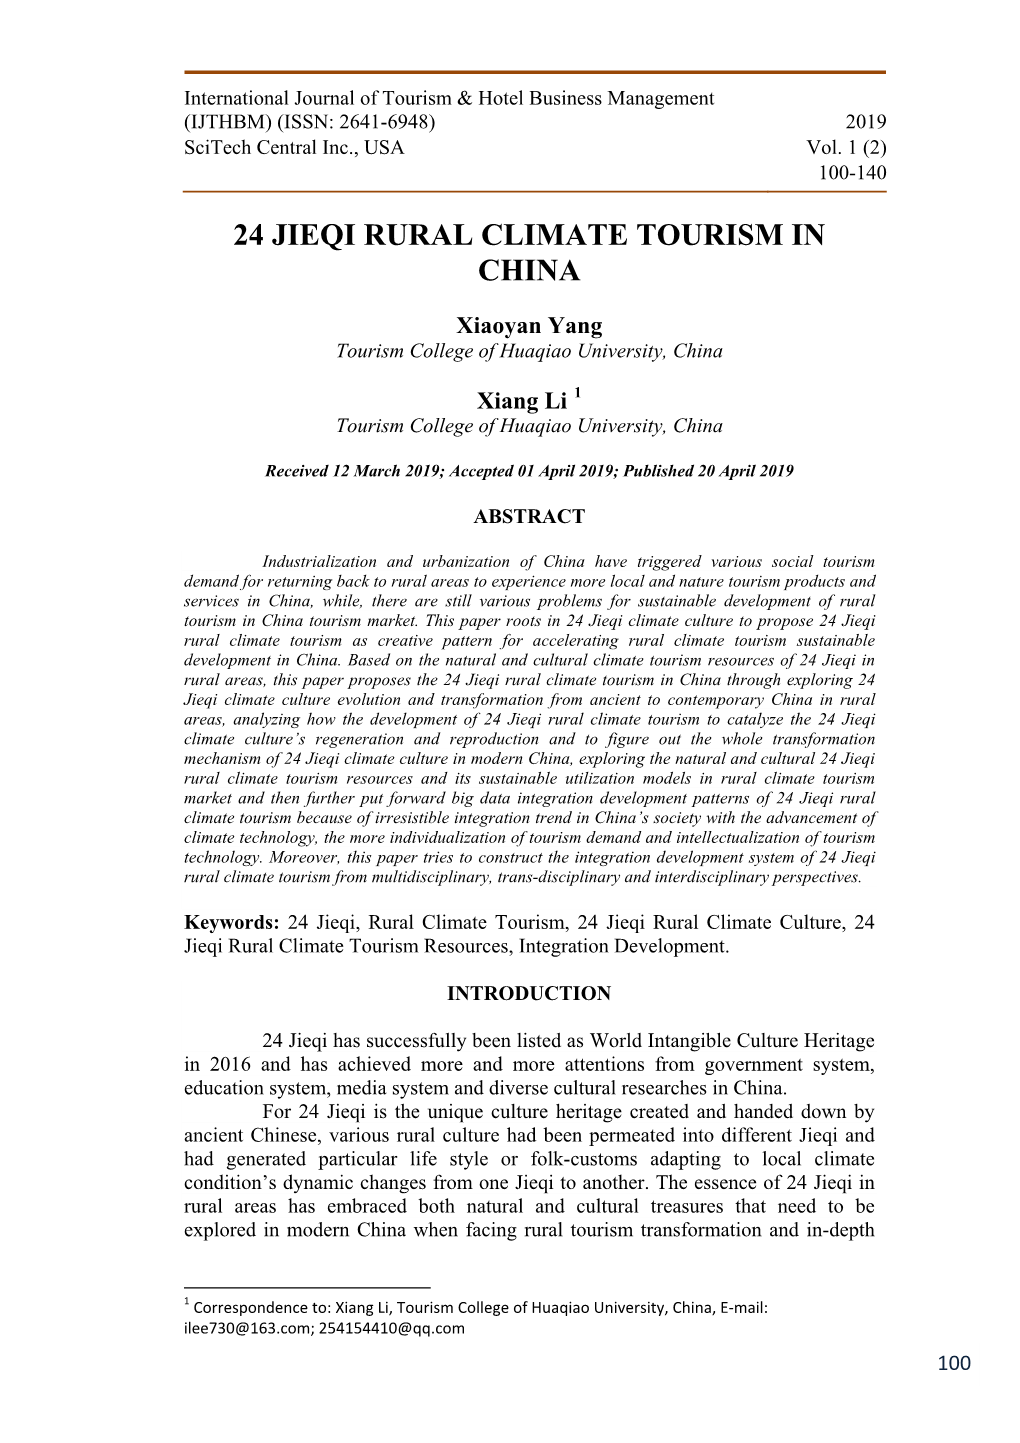 24 Jieqi Rural Climate Tourism in China